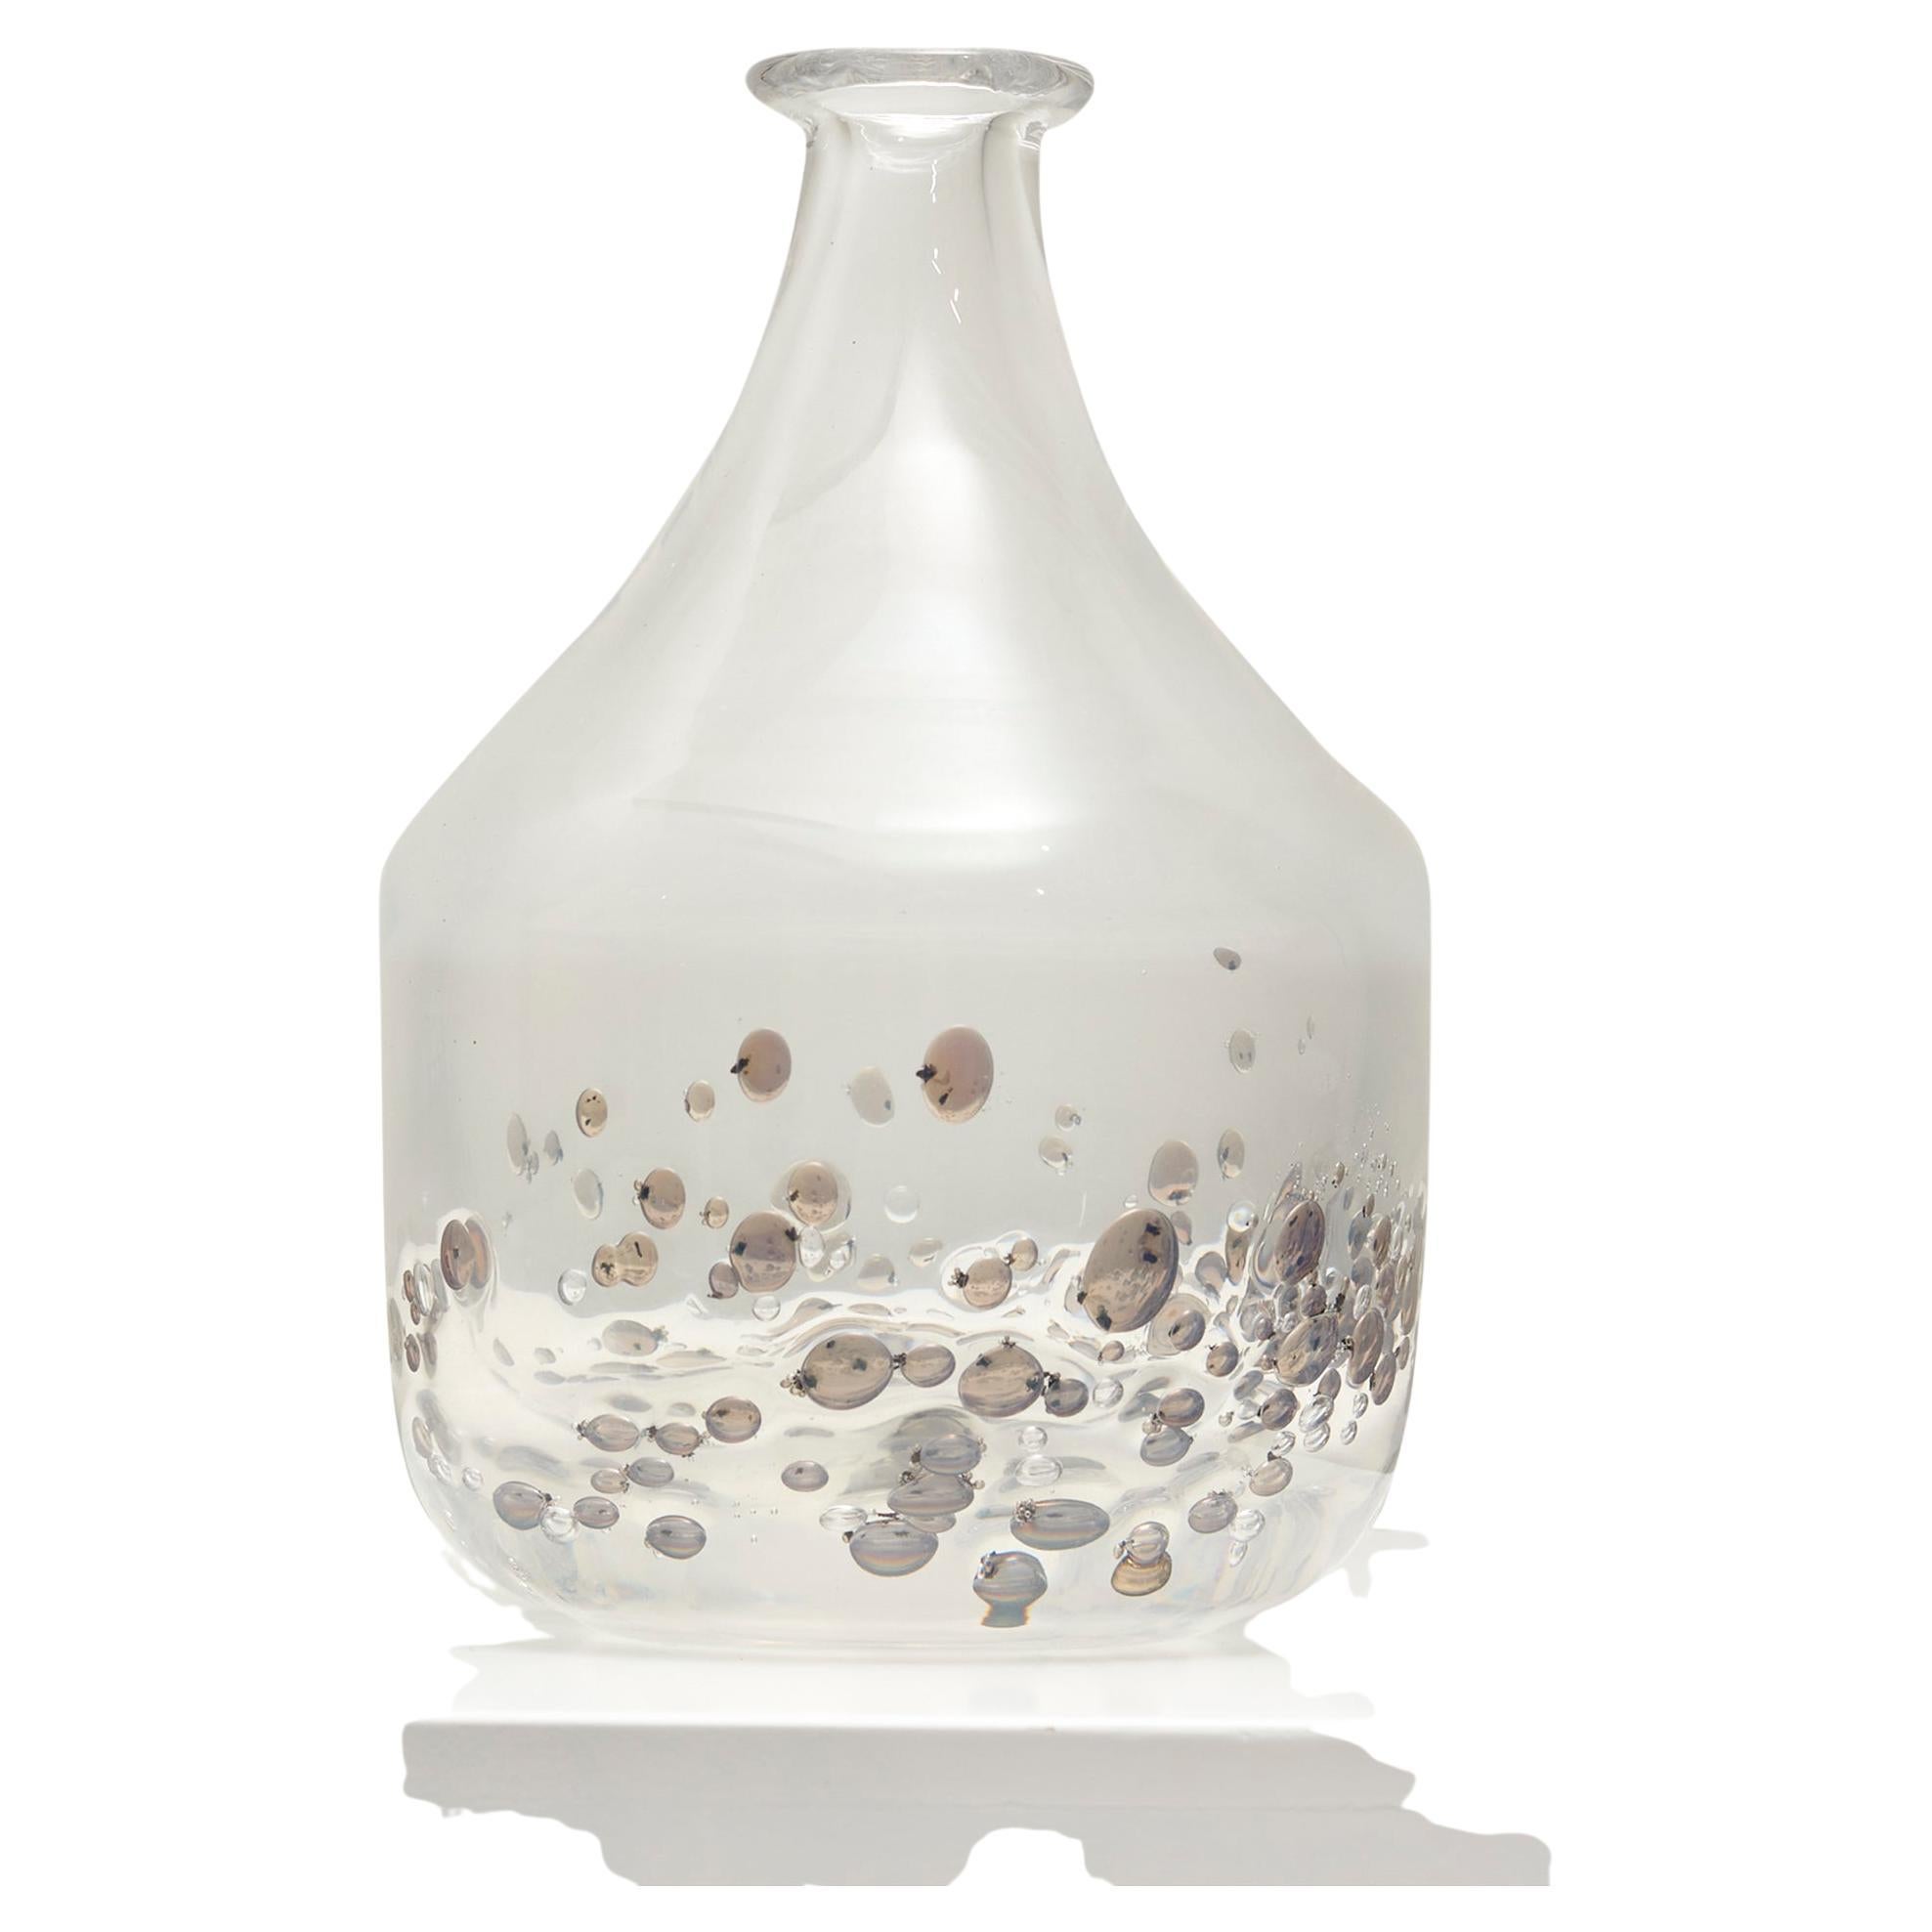 Bengt Edenfalk „Ferrara“-Vase aus klarem Glas, 1960er Jahre